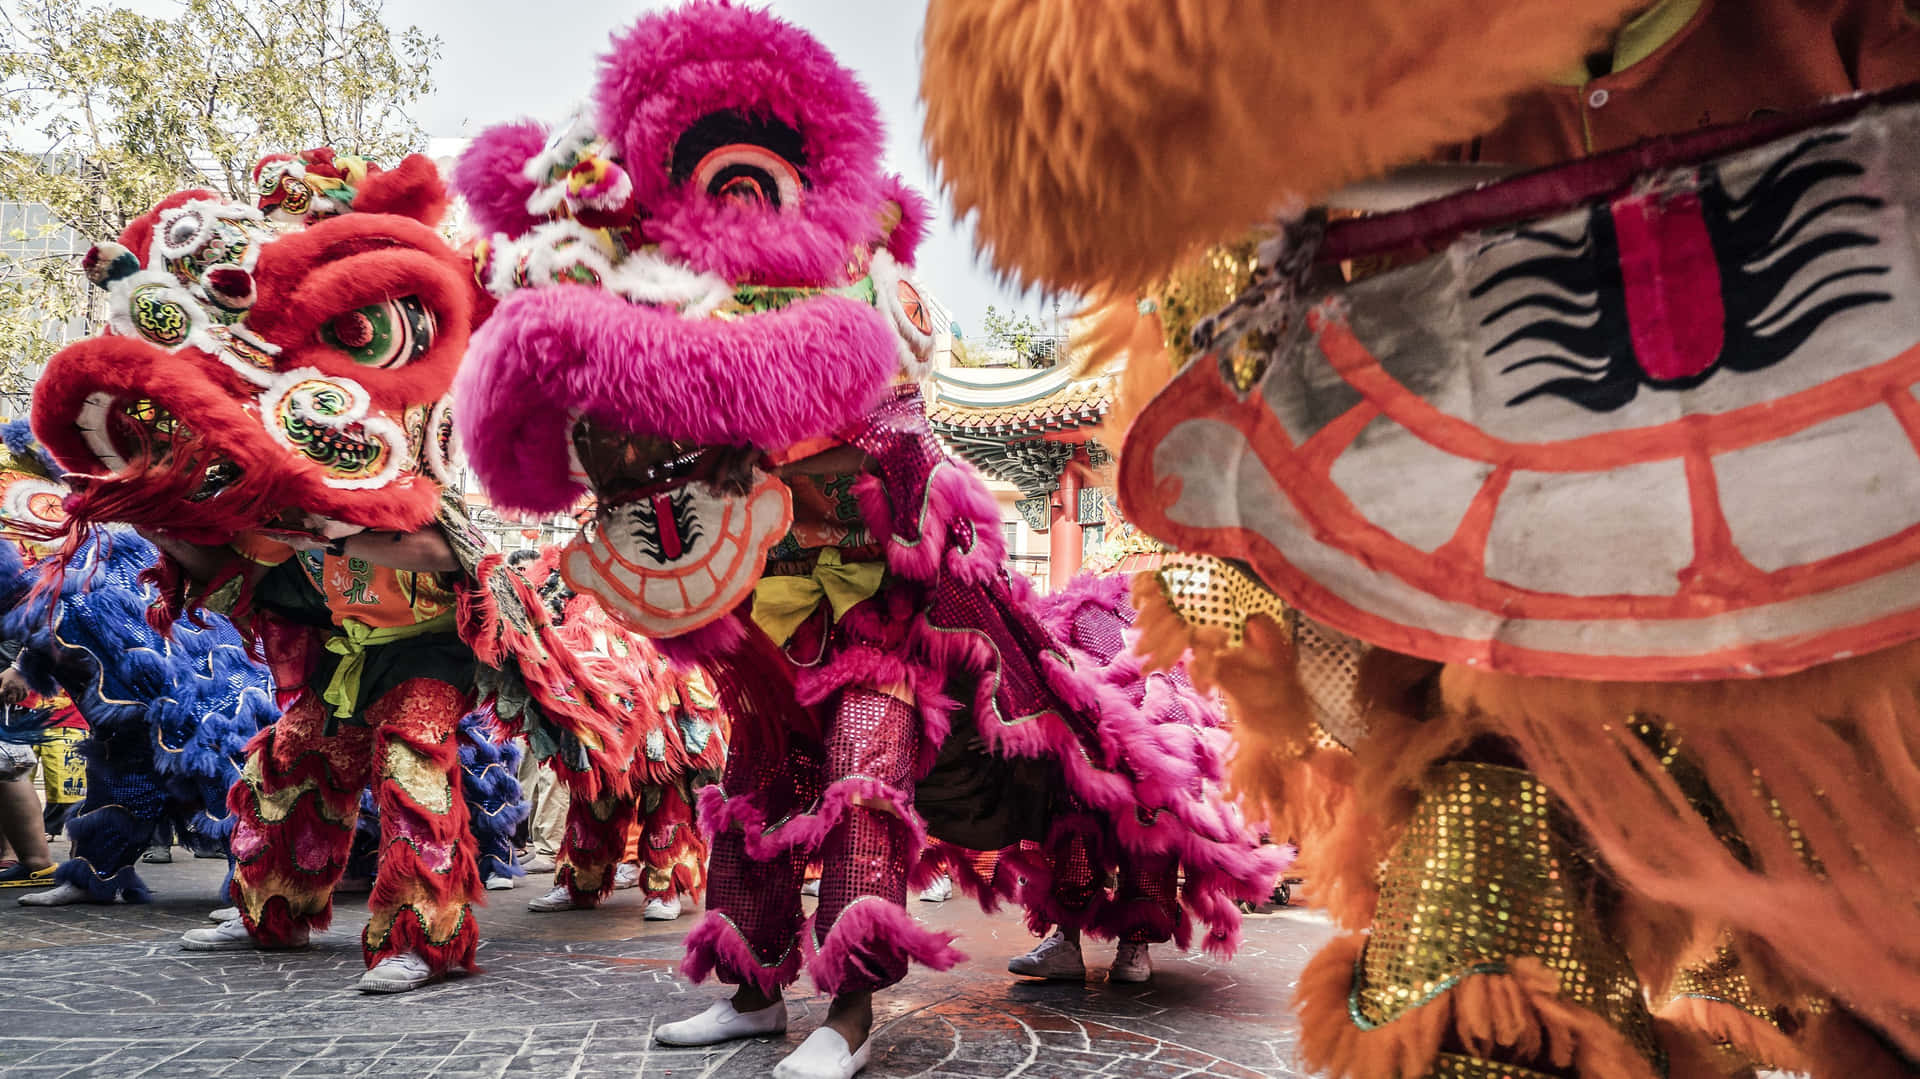 A Festive Chinese New Year Celebration